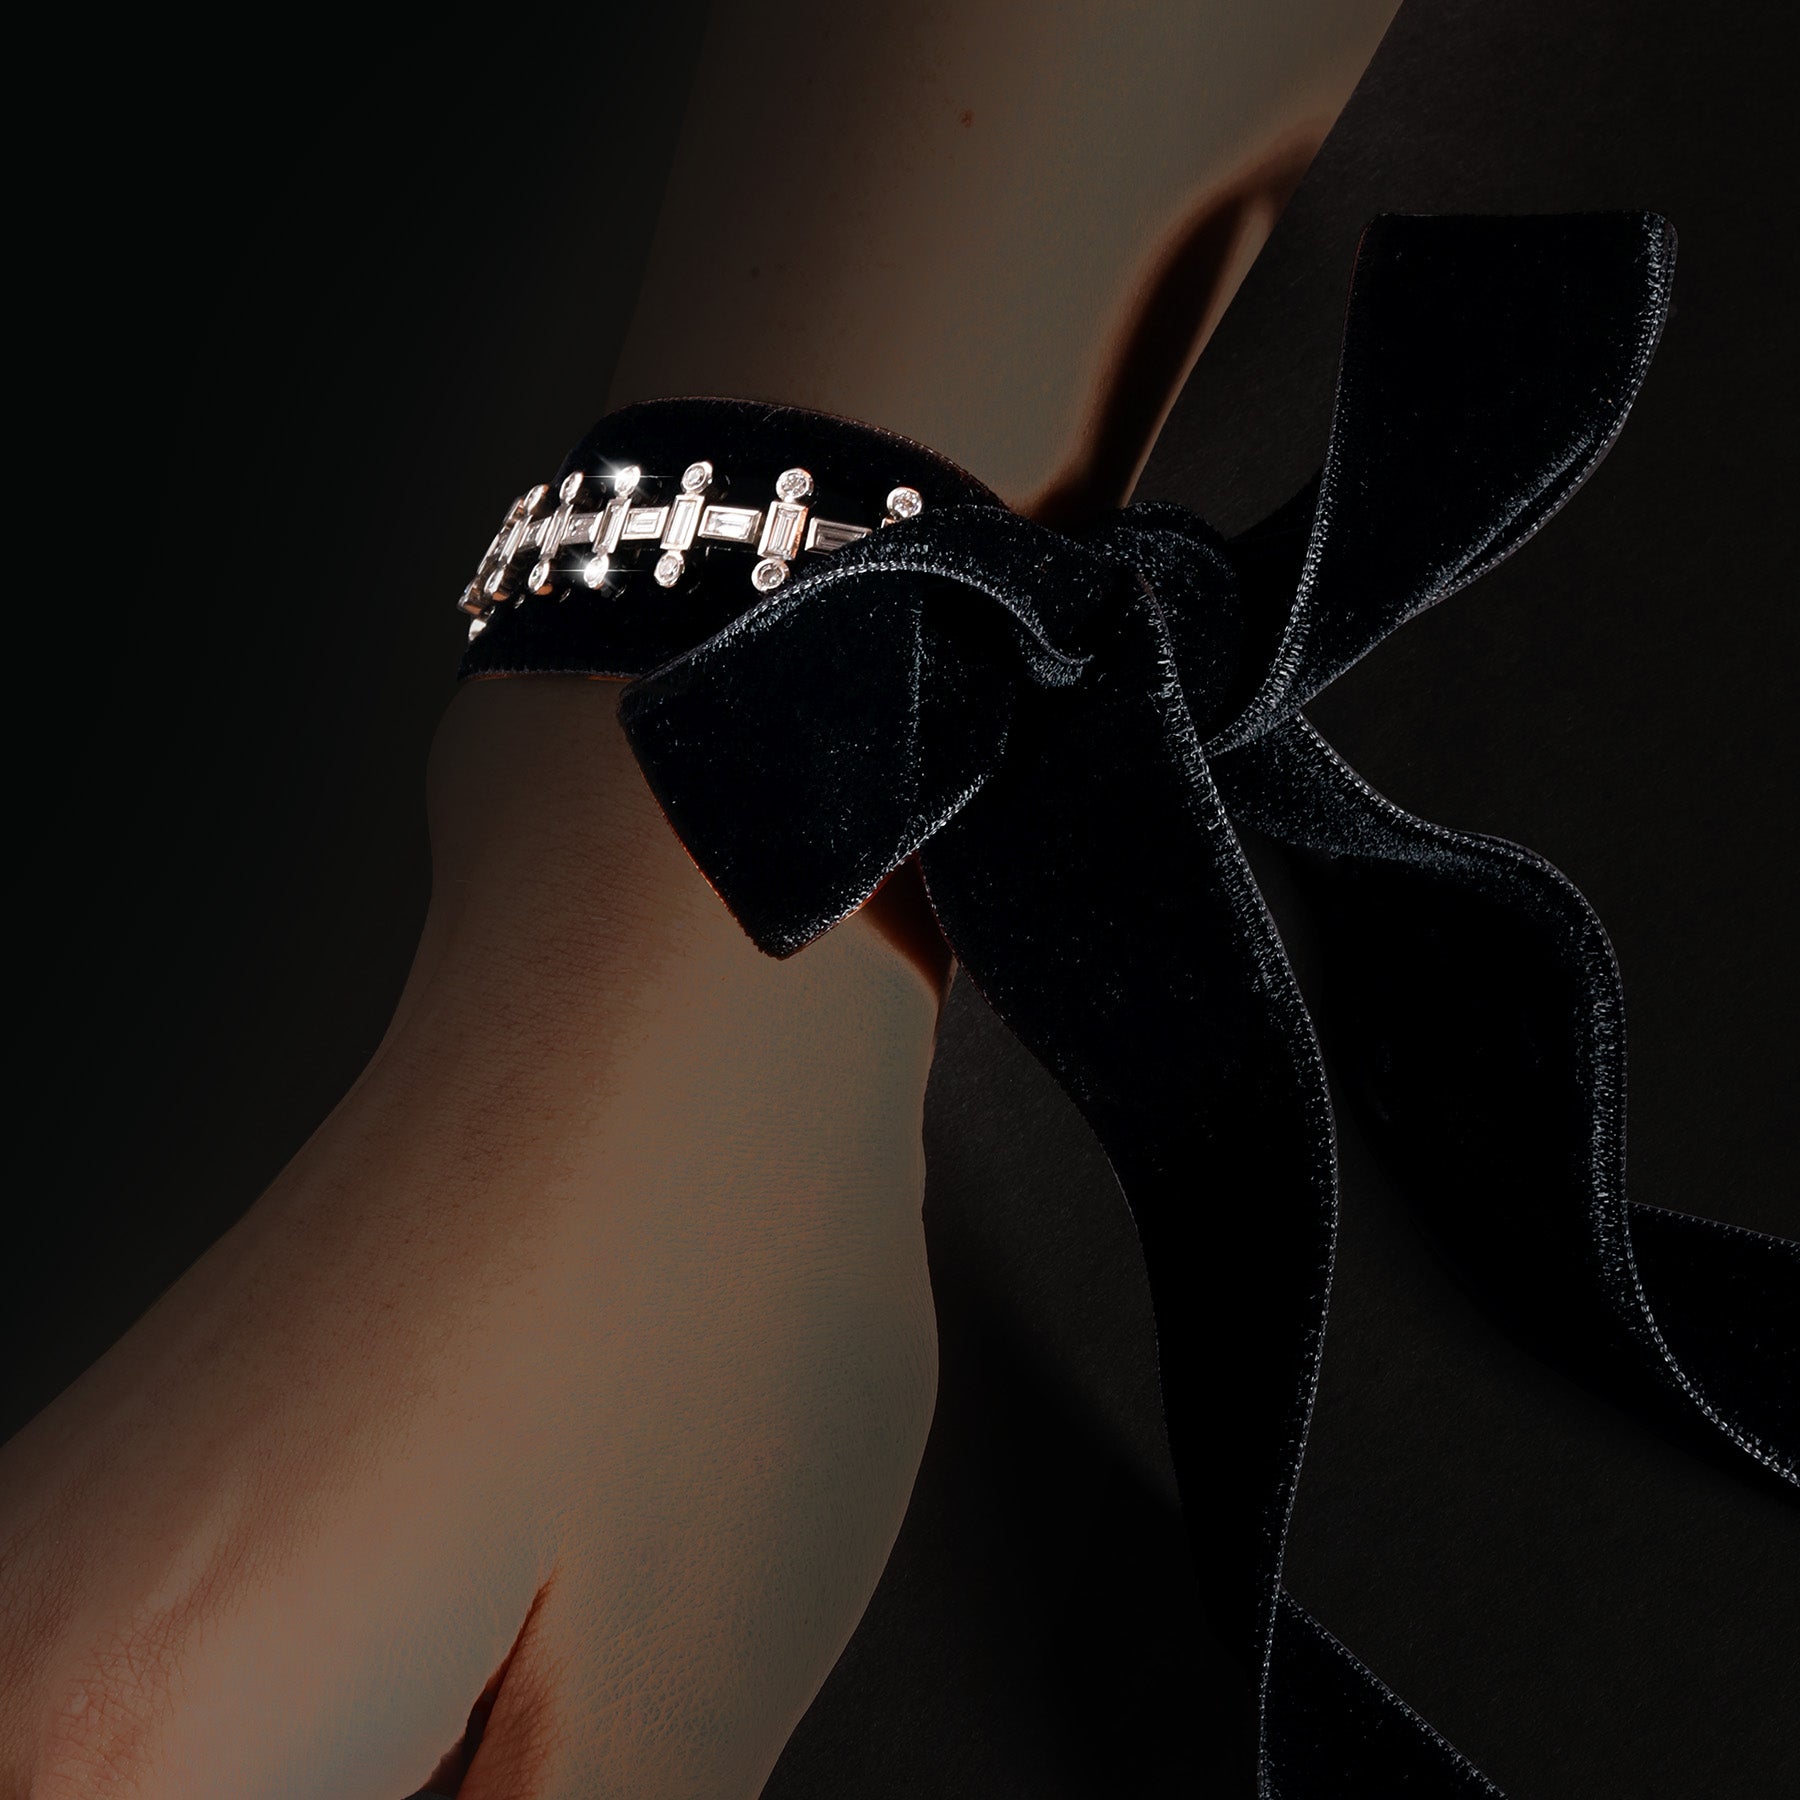 The Romantic Bracelet by designer Solange Azagury-Partridge - 18 White Gold and Diamonds - velvet ribbon styling